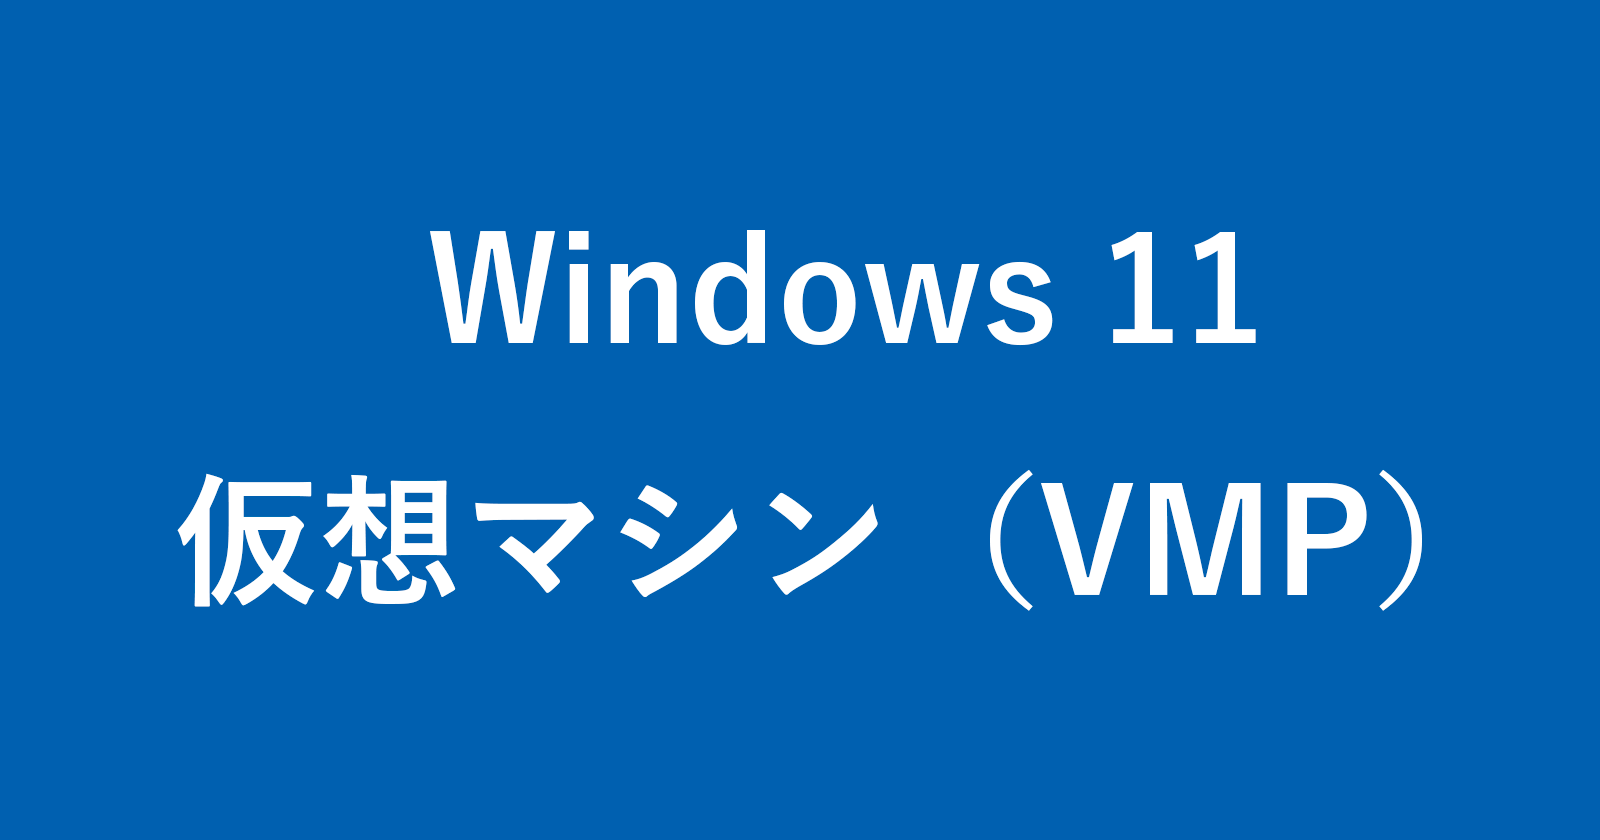 windows 11 virtual machine platform